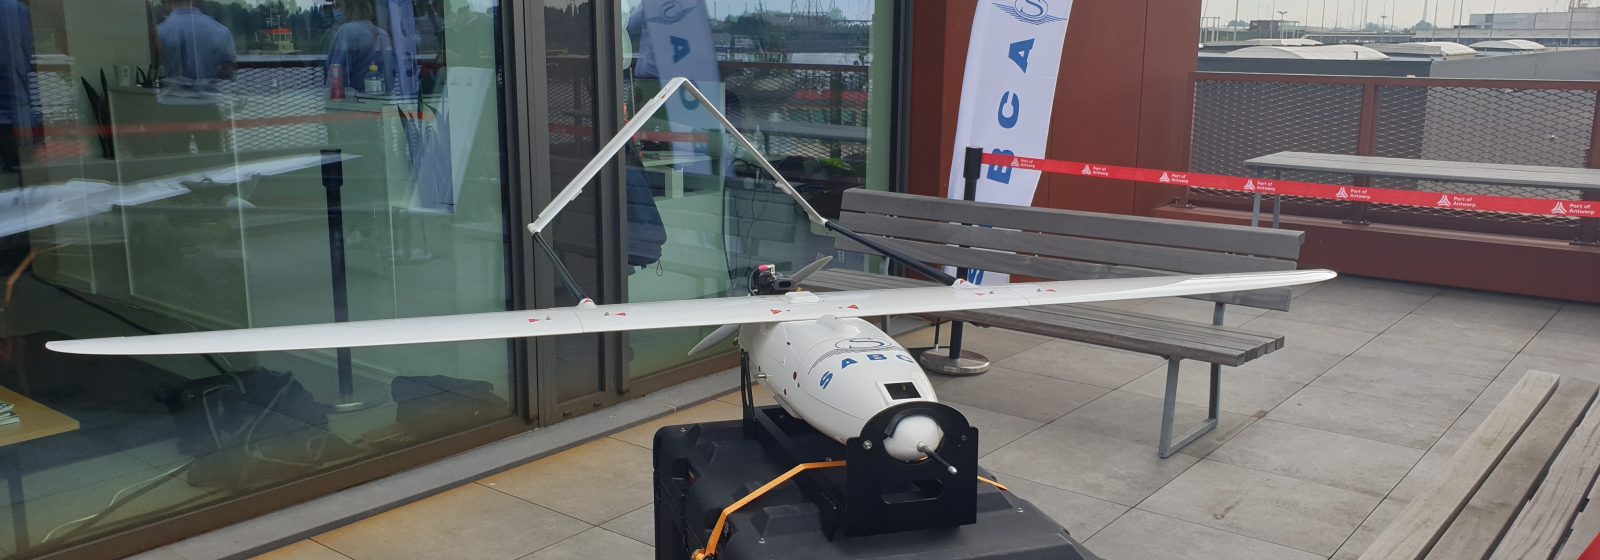 Autonome drone in haven Antwerpen